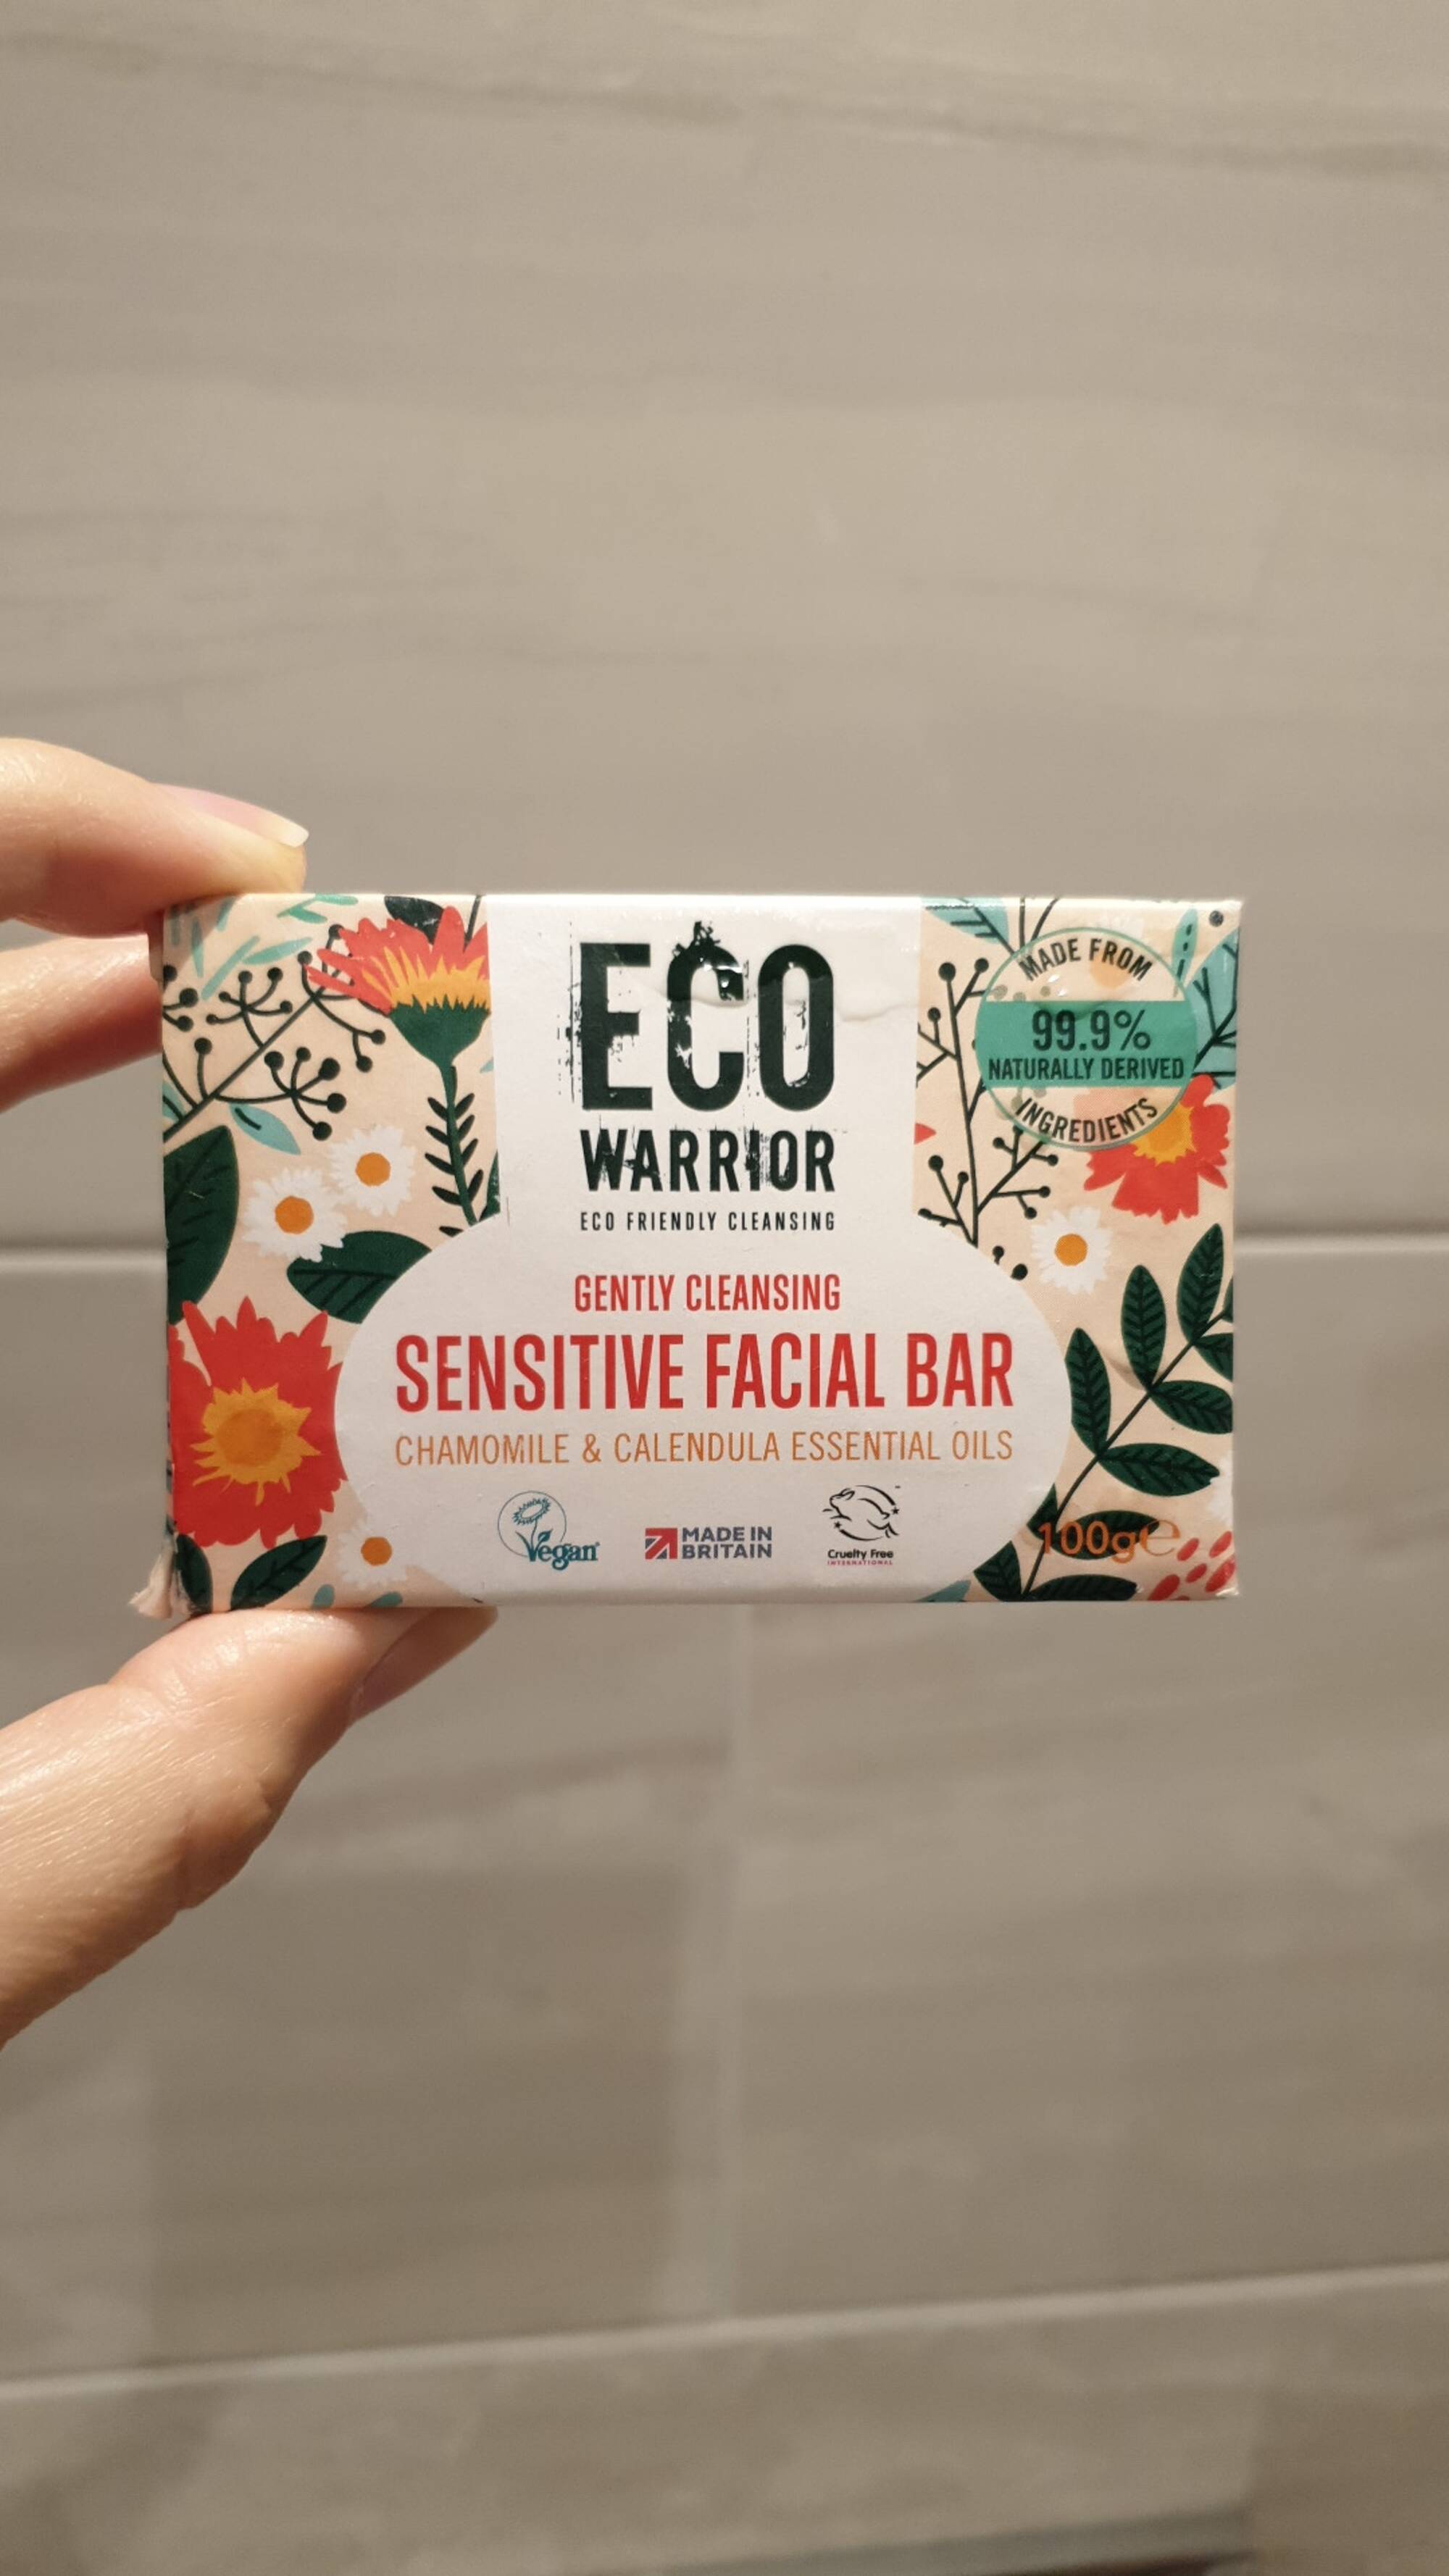 ECO WARRIOR - Gently cleansing - Sensitive facial bar